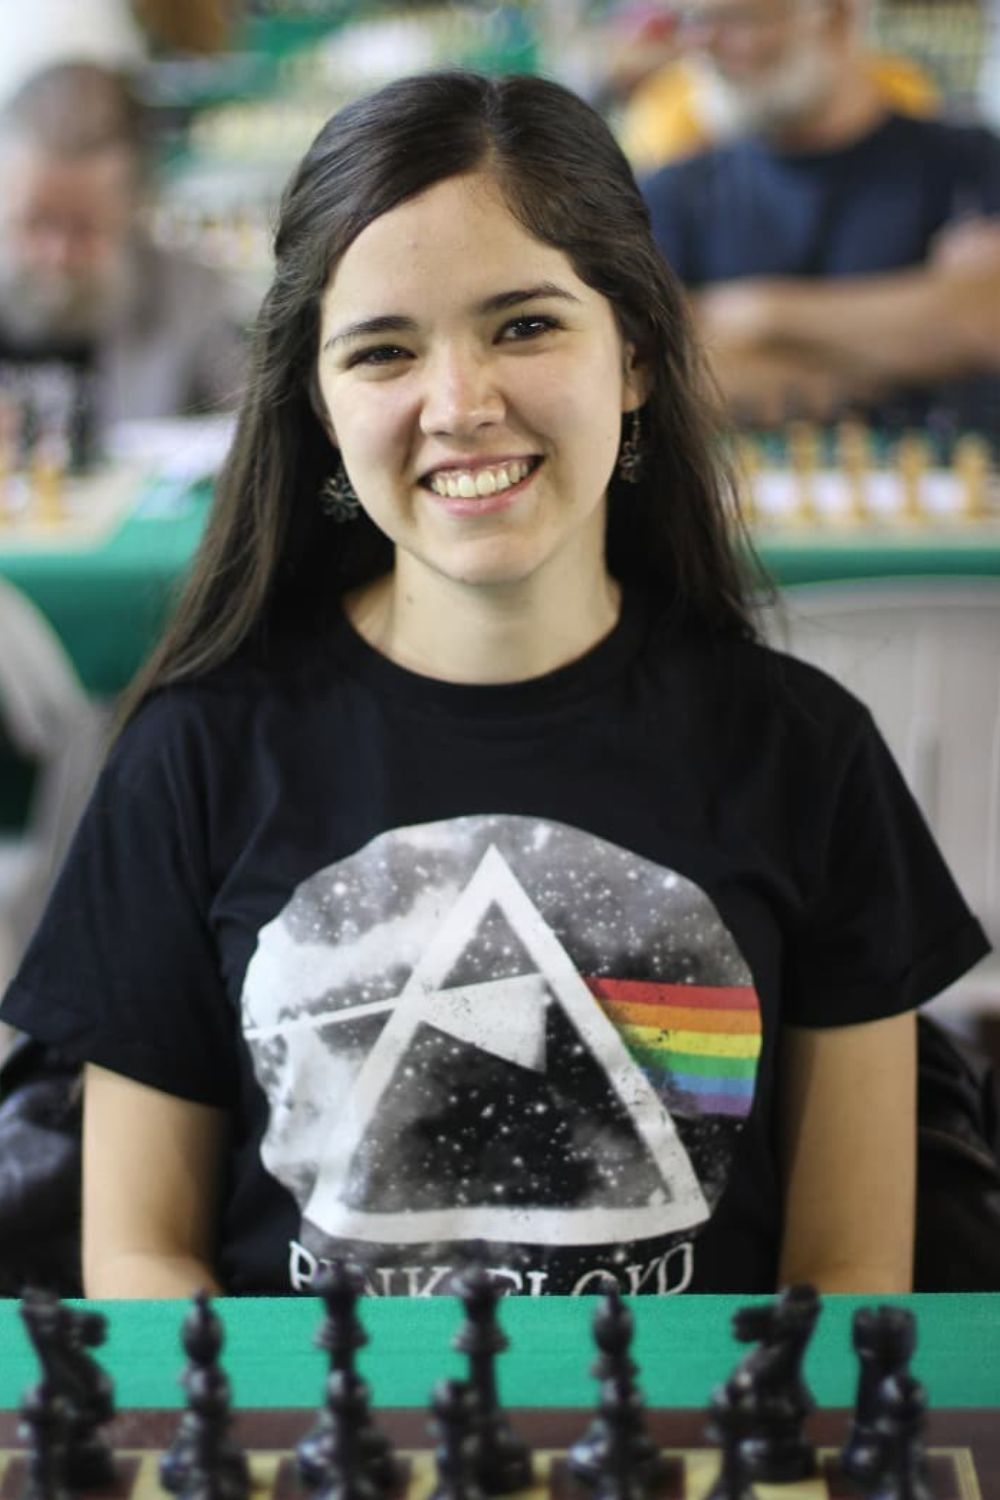 Ayelén Martinez During The Chess Championship